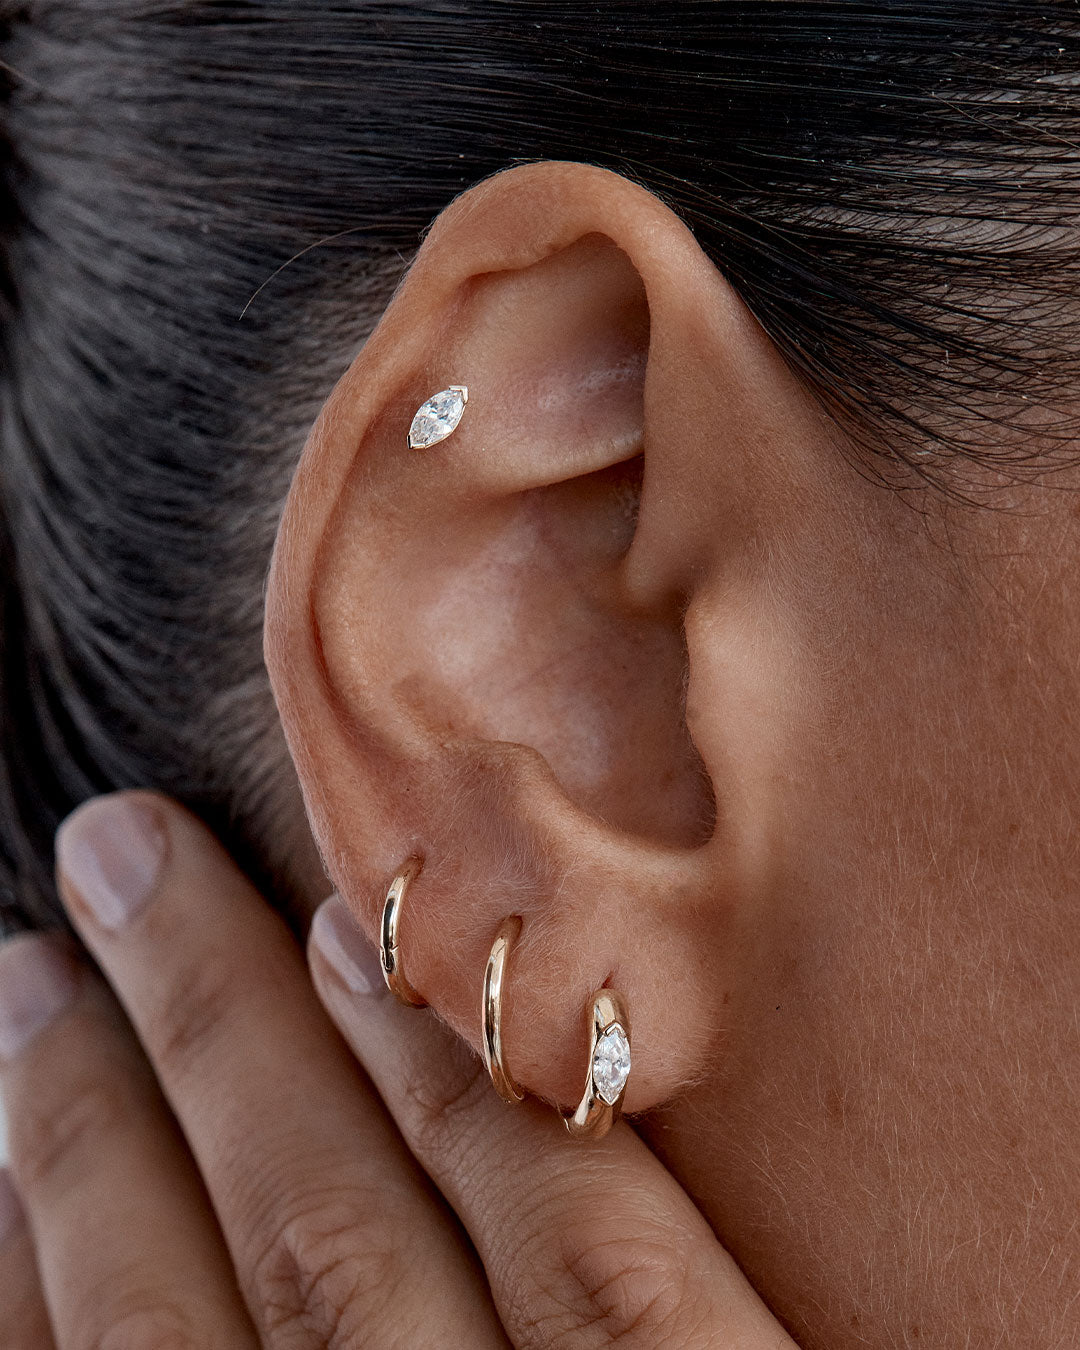 Helix Earring, Moonstone Bead Helix Earring, Cartilage Hoop Silver